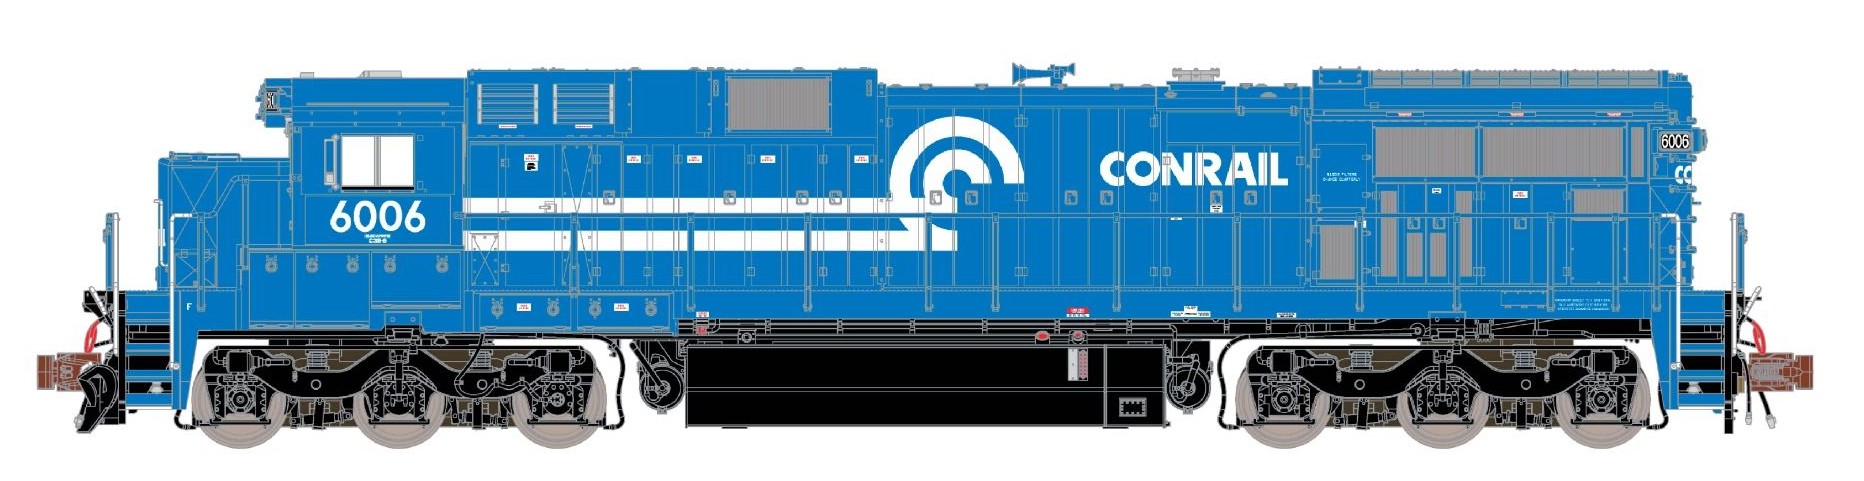 ScaleTrains Rivet Counter N SXT39177 DCC/ESU Loksound 5 Equipped GE C39-8 Locomotive Phase III Conrail '1990s Era' CR #6010